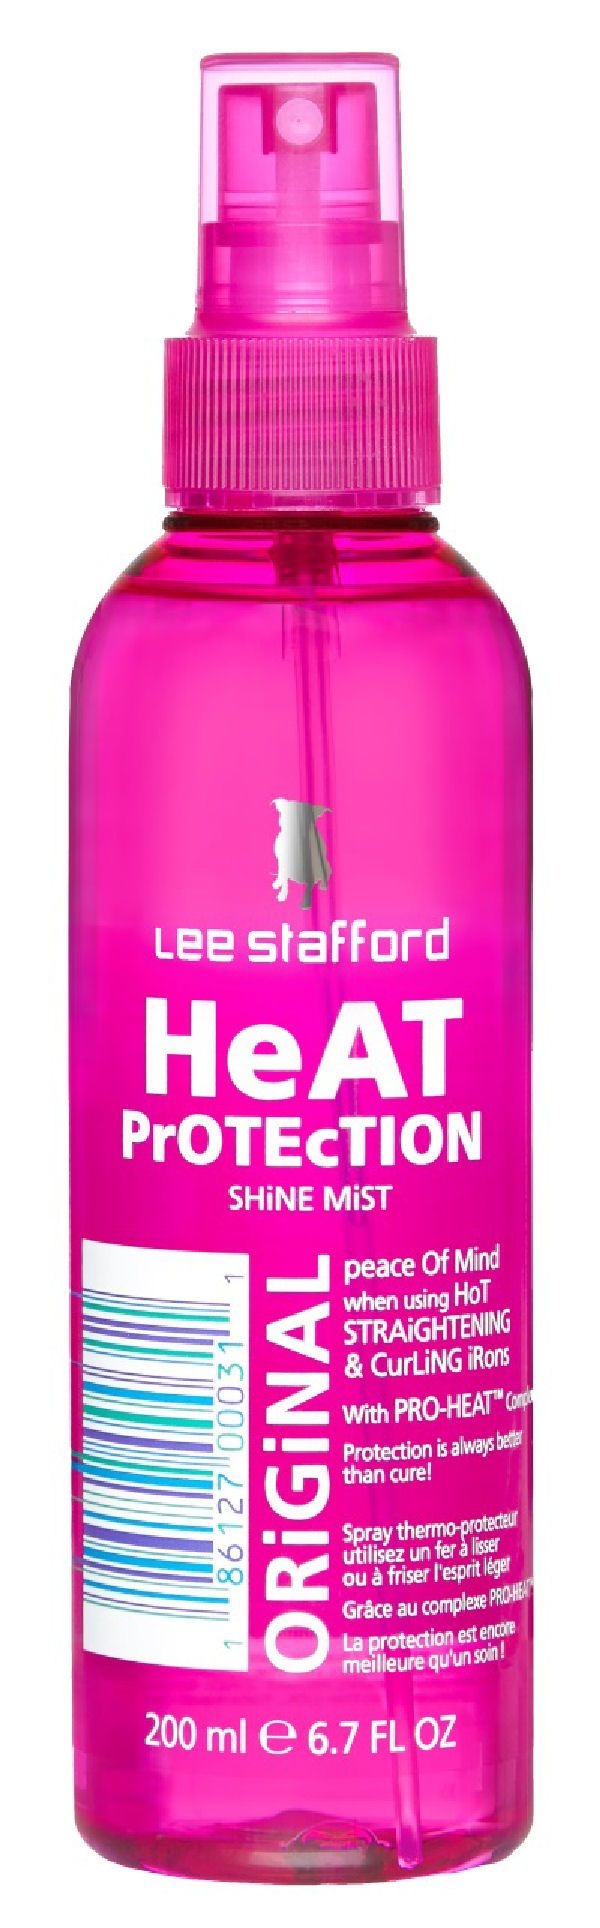 Lee Stafford Flat Iron Protection Mist